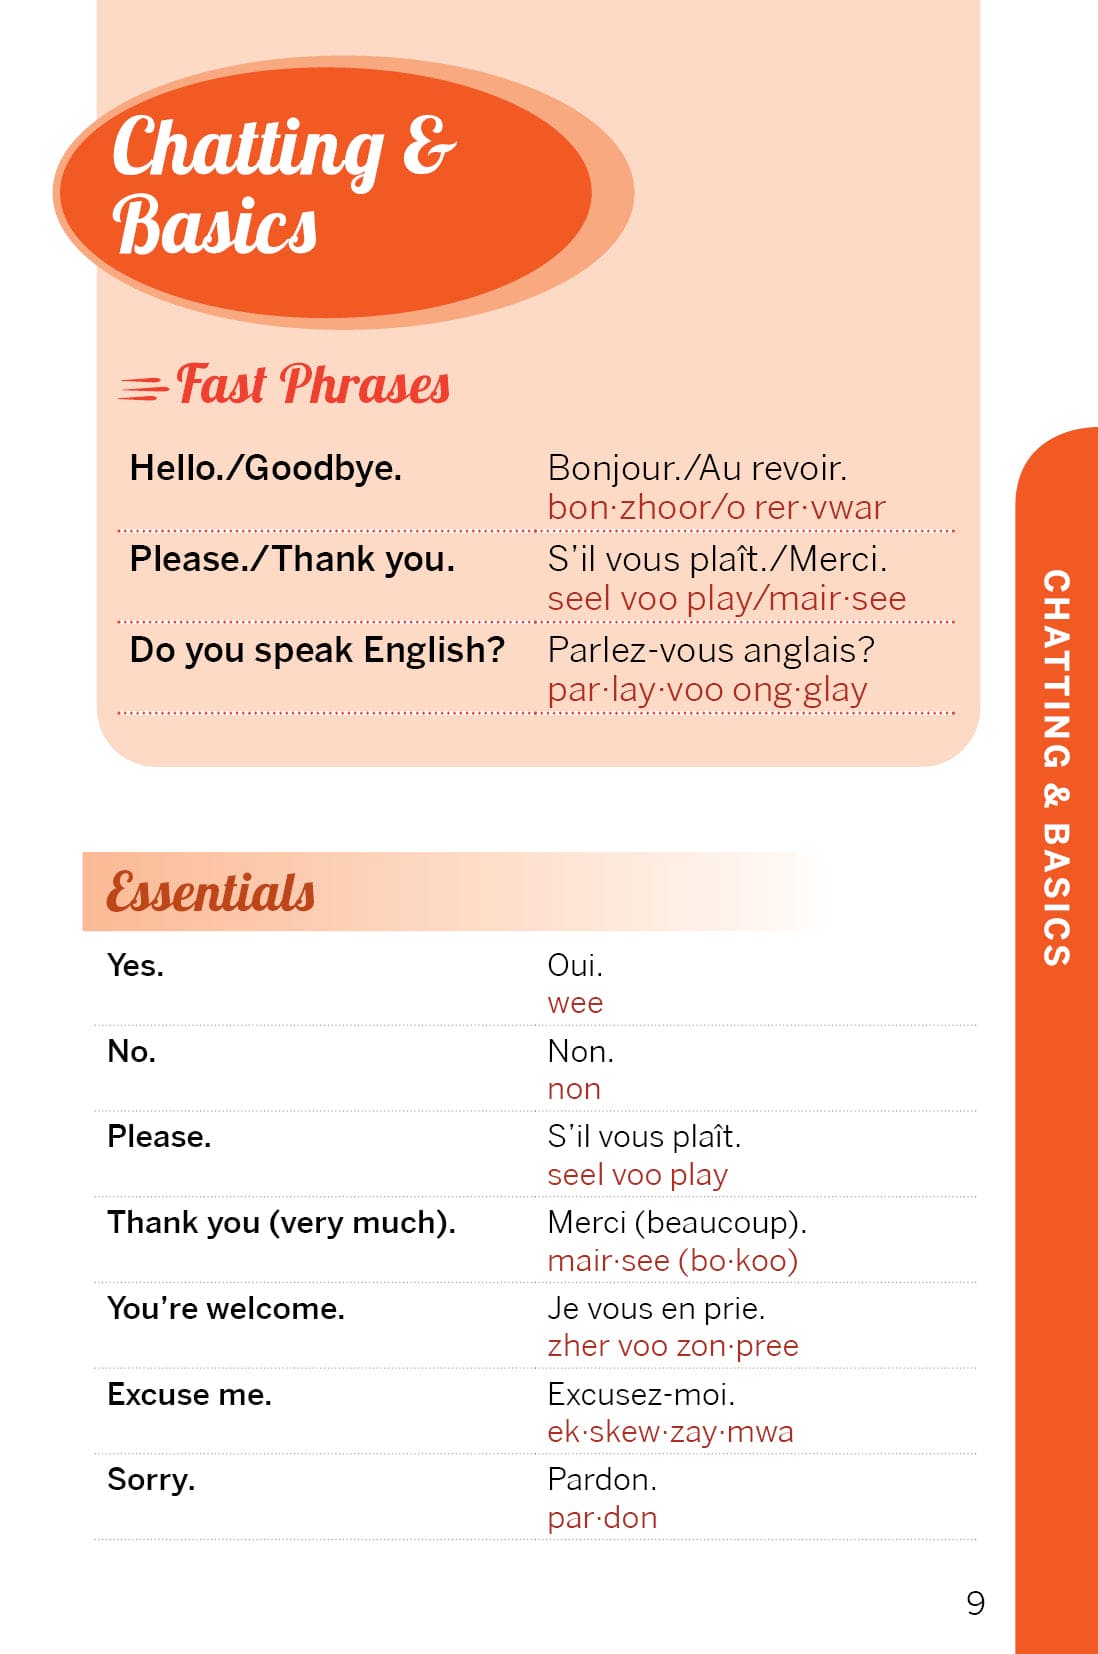 Fast Talk French - Book + eBook